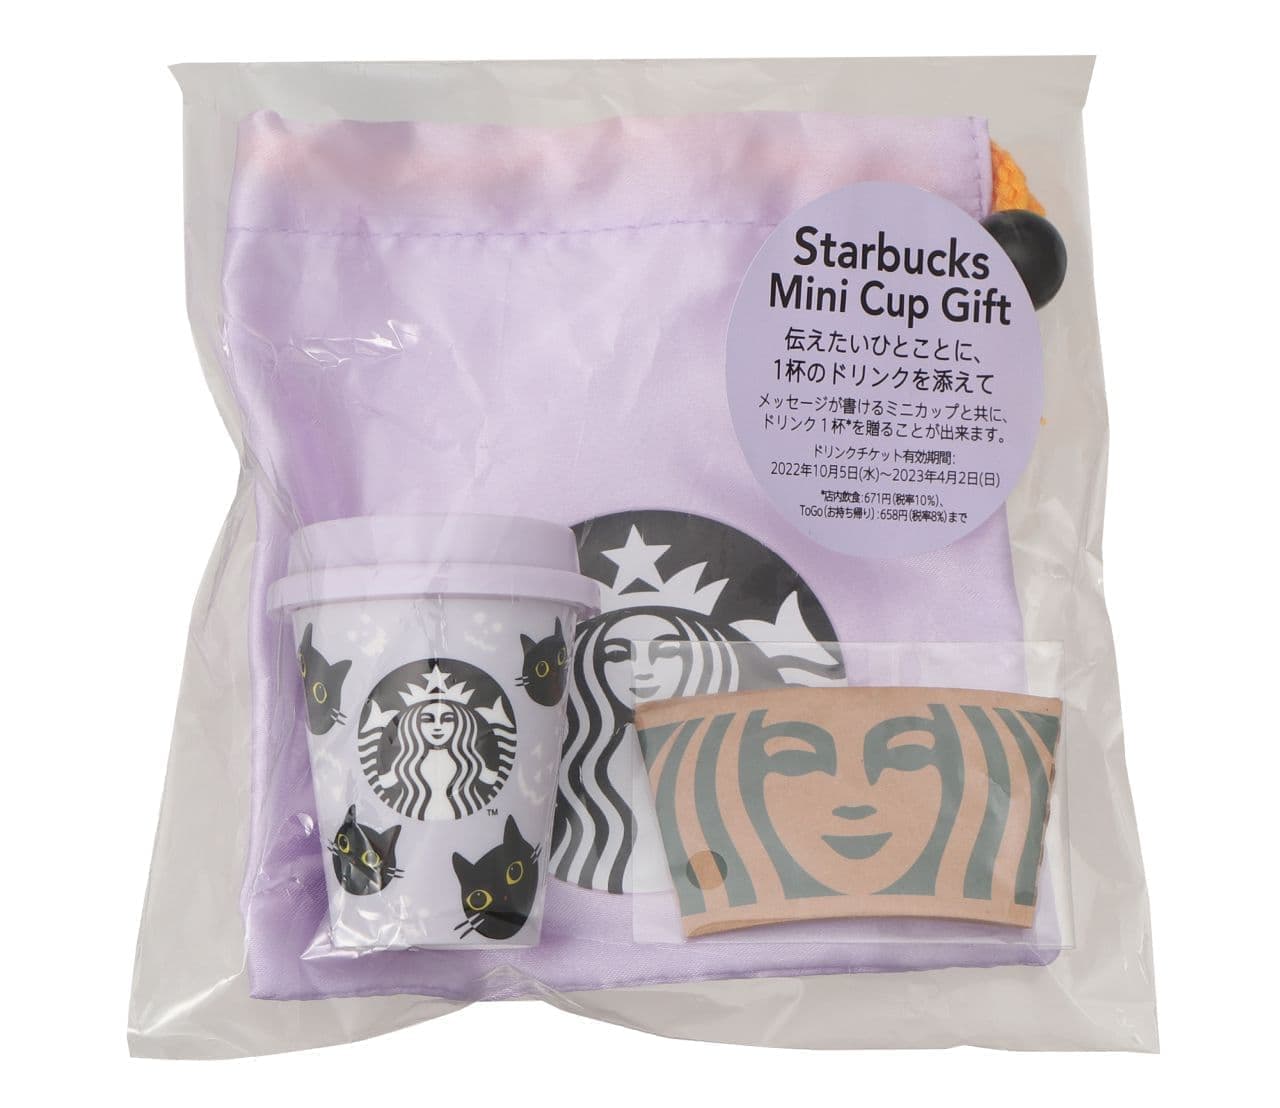 Starbucks "Halloween 2022 Starbucks Mini Cup Gift Cat"